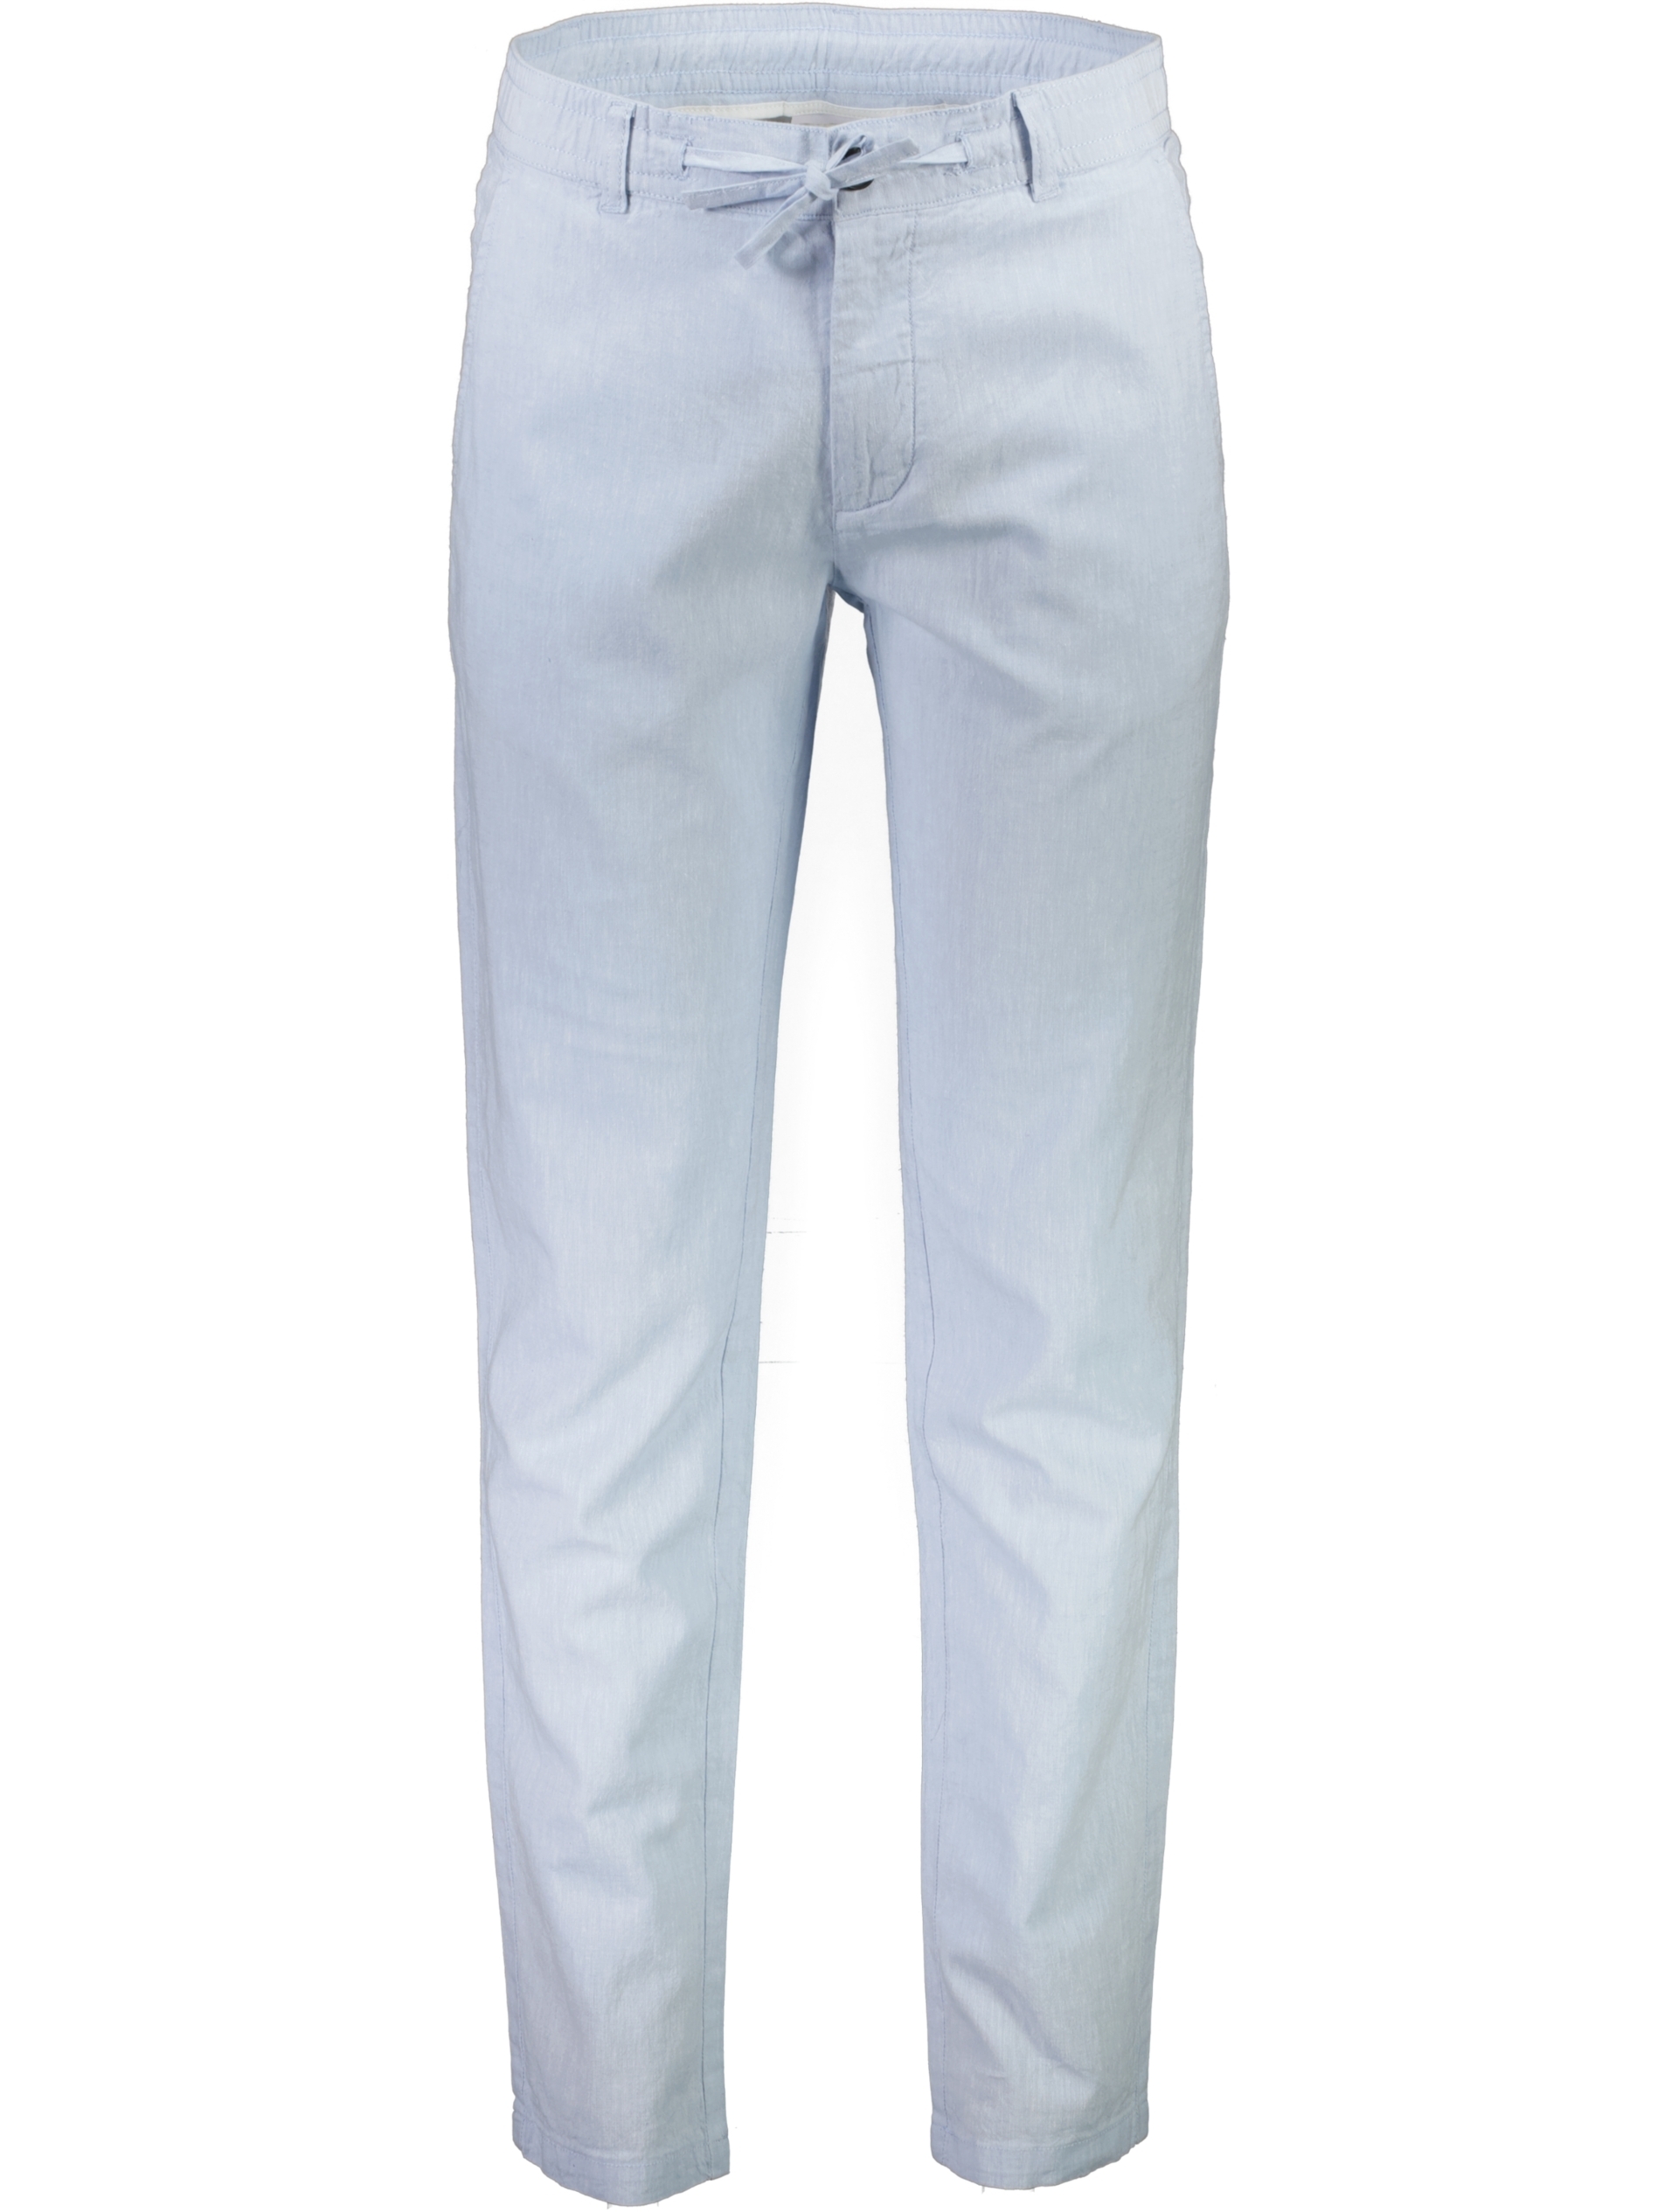 Lindbergh Linen pants blue / lt blue